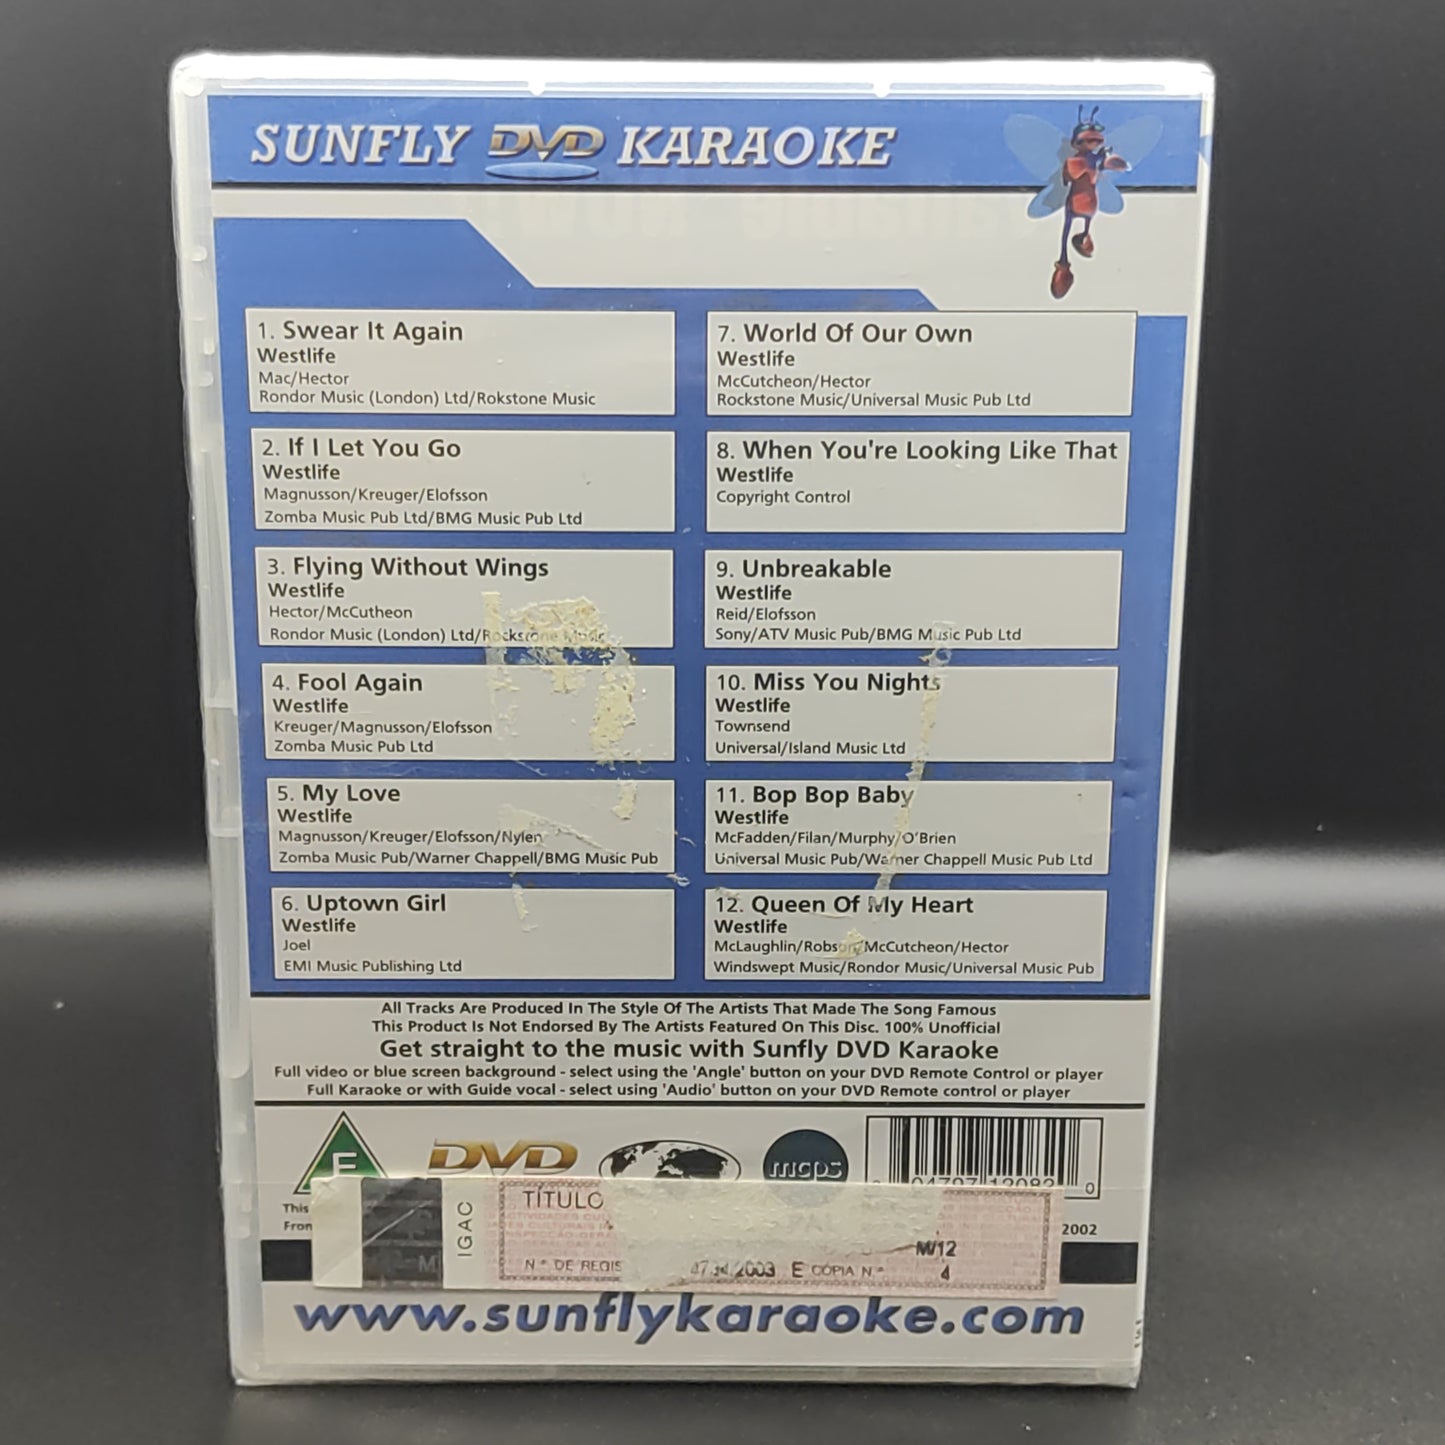 Westlife - Sunfly dvd Karaoke